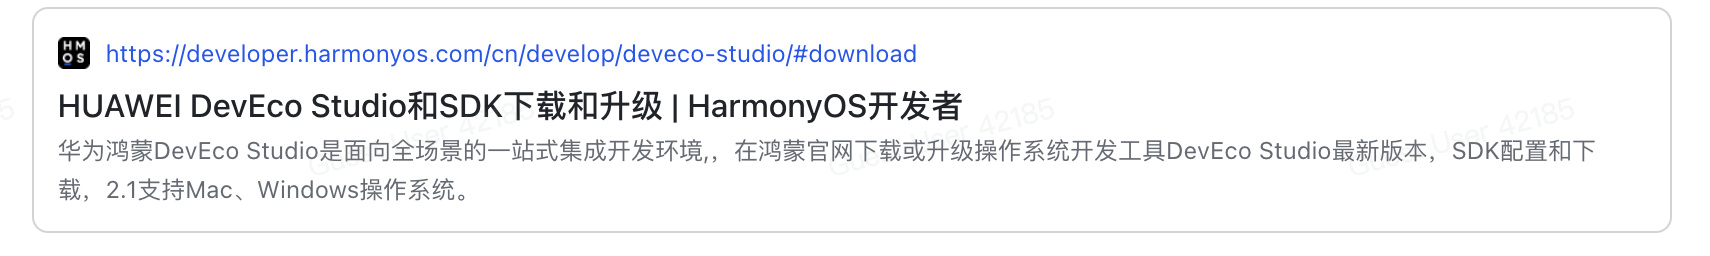 https://developer.harmonyos.com/cn/develop/deveco-studio/#download